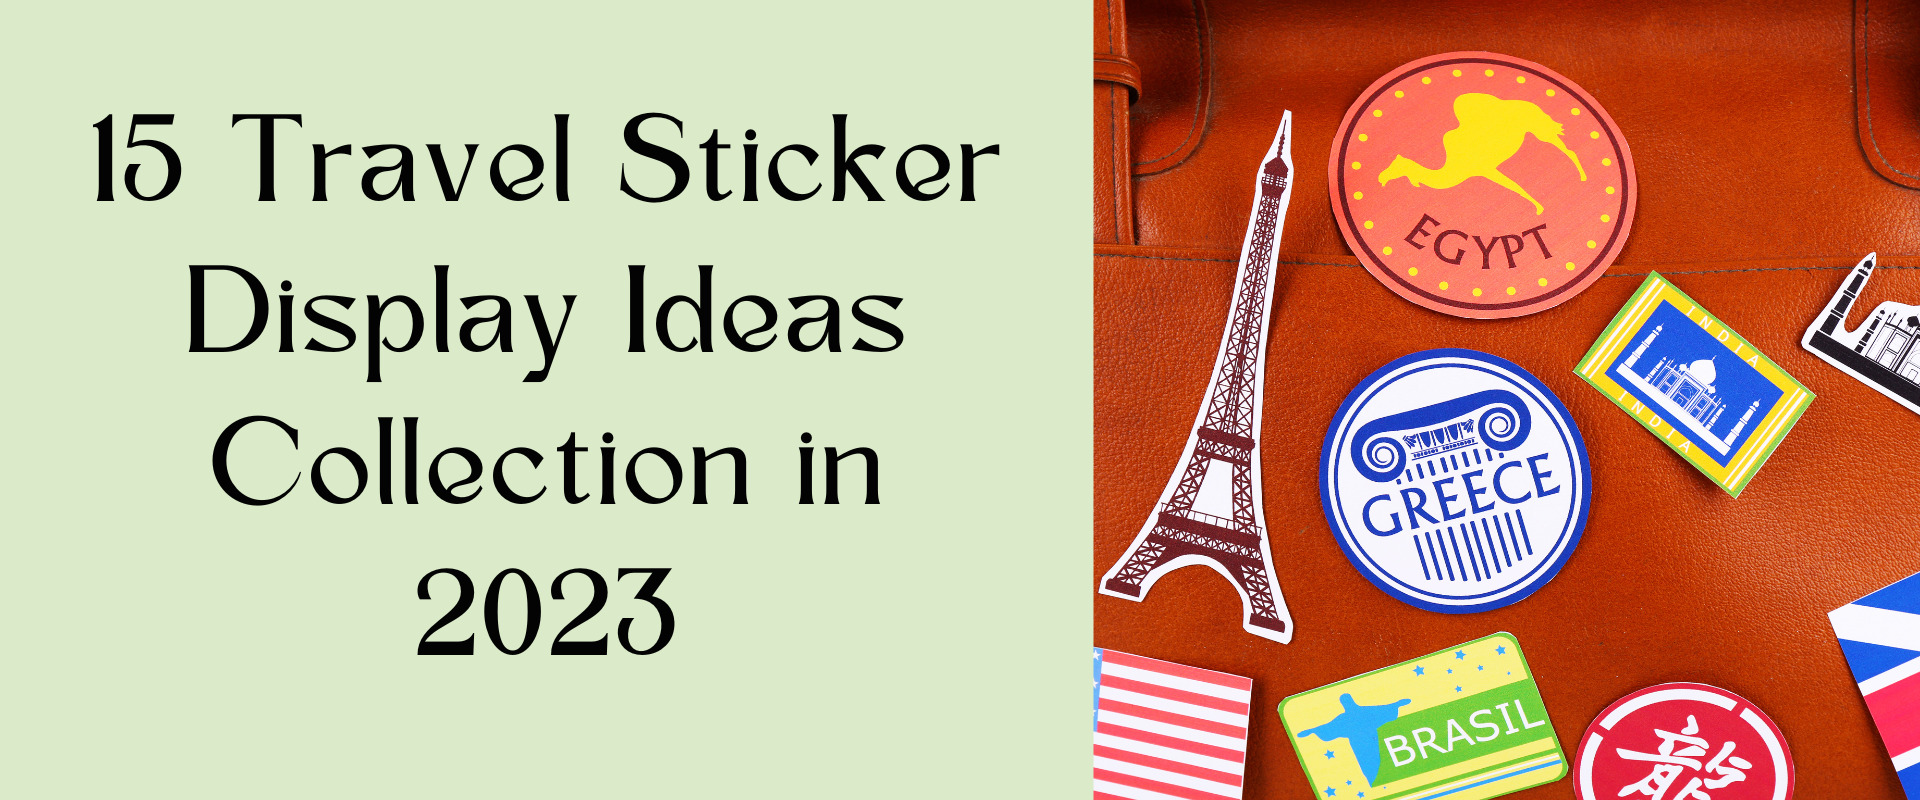 Best 15 Travel Sticker Display Ideas Collection in 2023